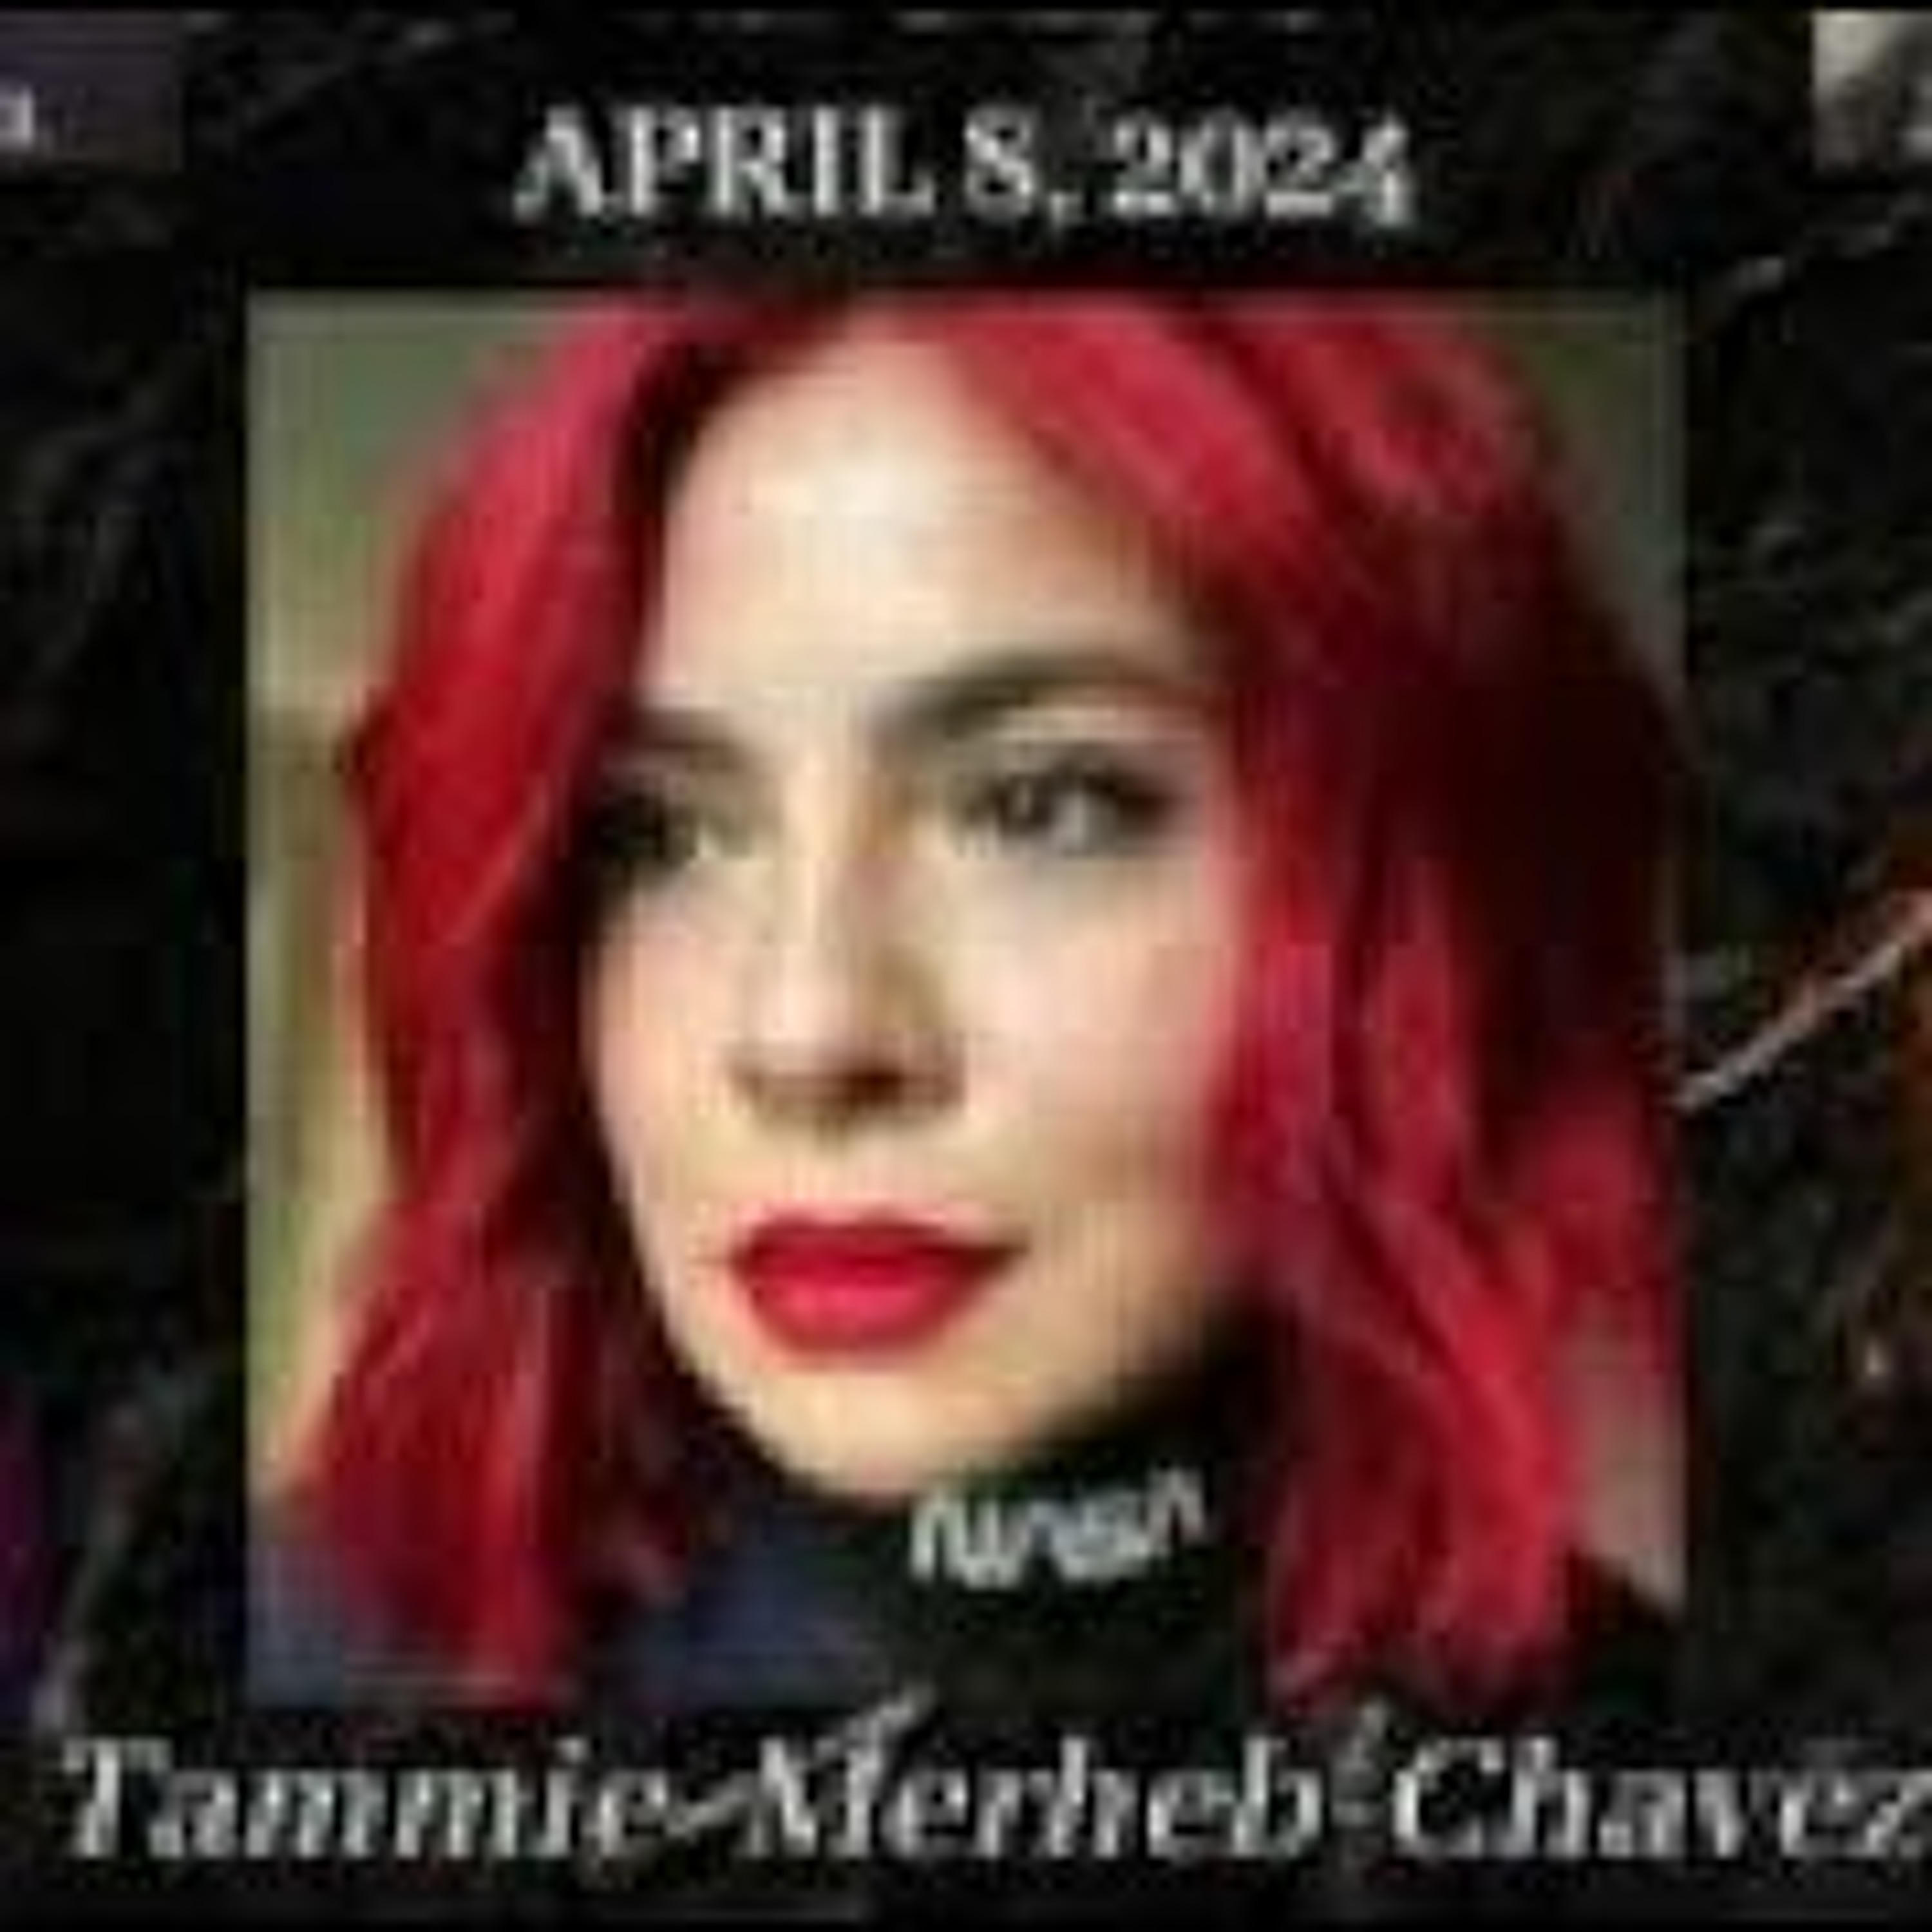 Horsefly Chronicle S Radio - Tammie Merheb - Chavez